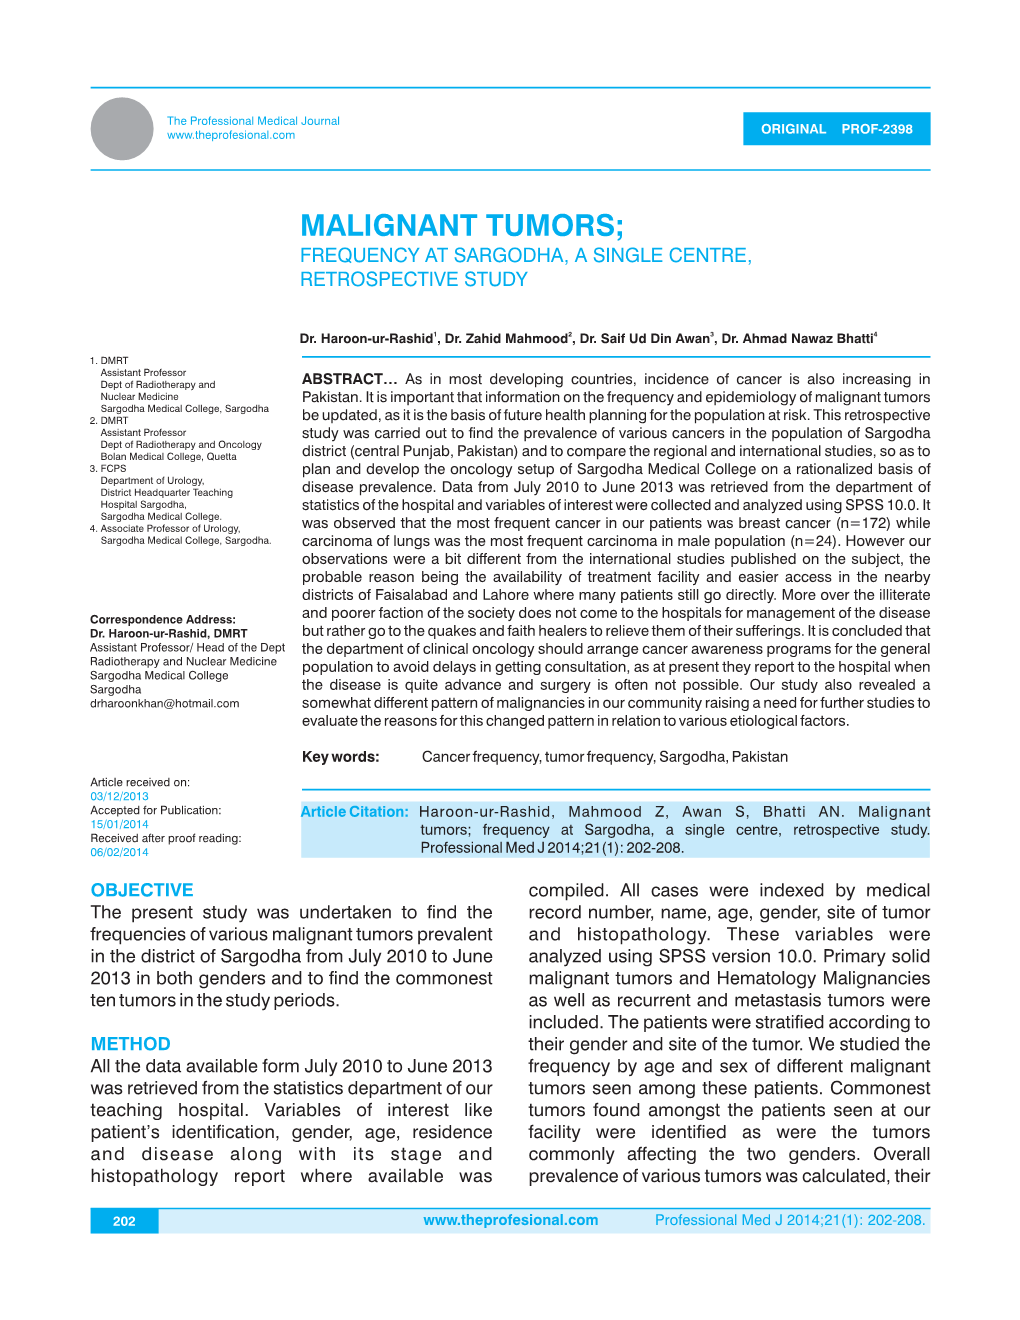 Malignant Tumors; Frequency at Sargodha, a Single Centre, Retrospective Study